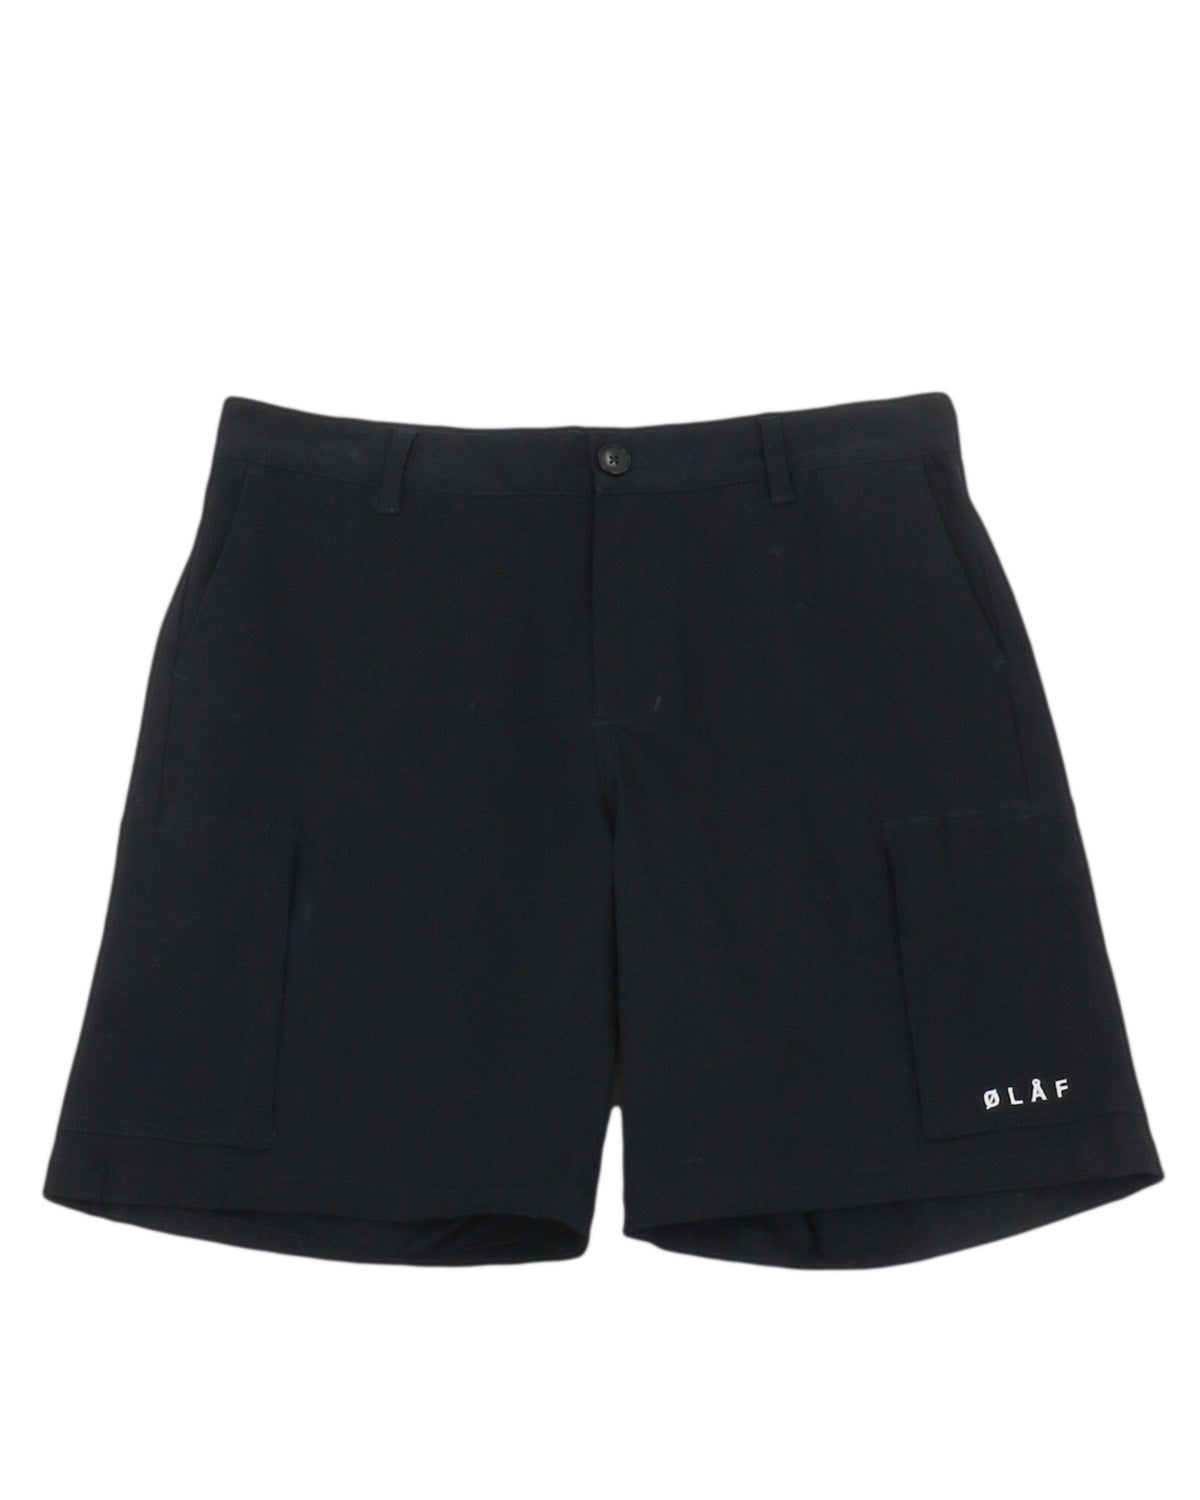 olaf_olaf zip pocket shorts_navy_1_3